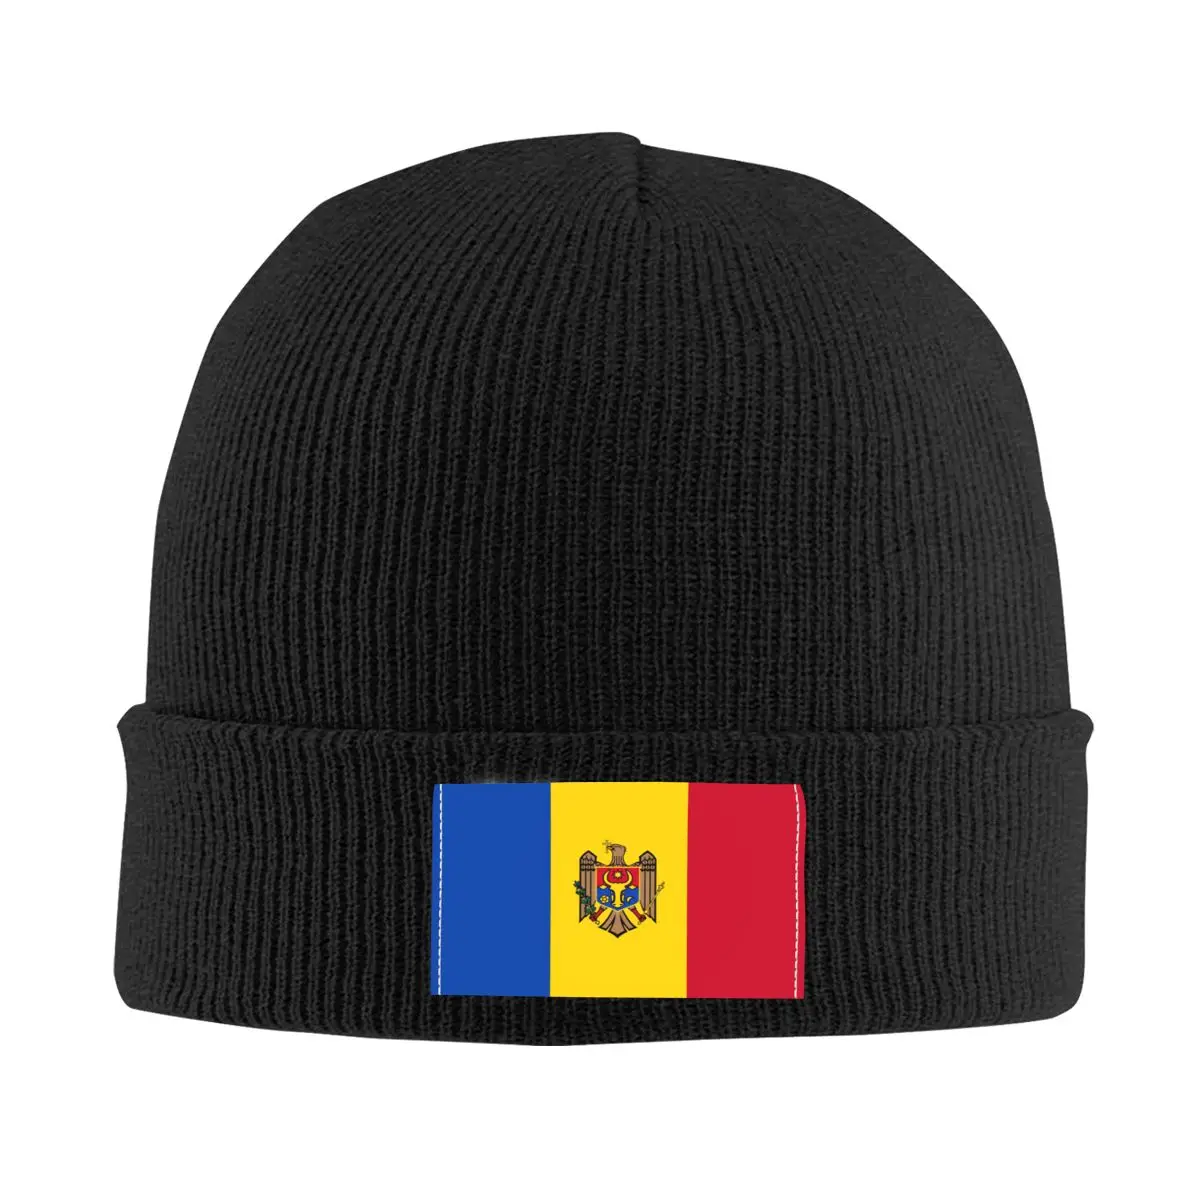 Flag Of Moldova Skullies Beanies Caps For Men Women Unisex Hip Hop Winter Warm Knit Hat Adult Bonnet Hats 1